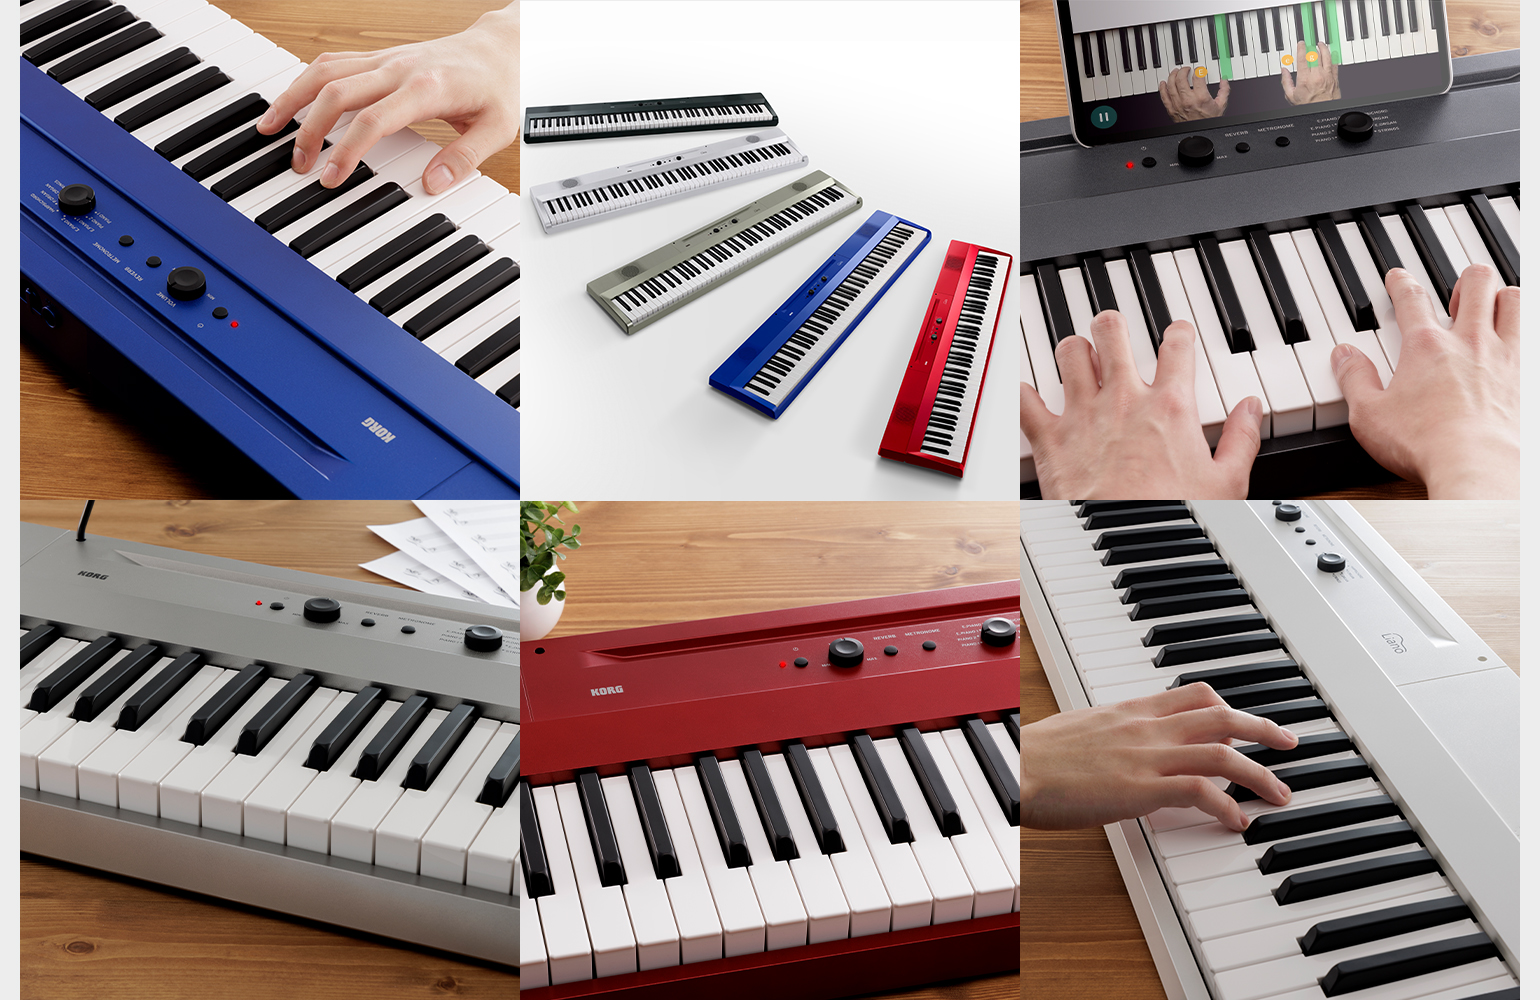  Korg, 88-Key Digital Pianos-Home (L1PWHITE) : Musical